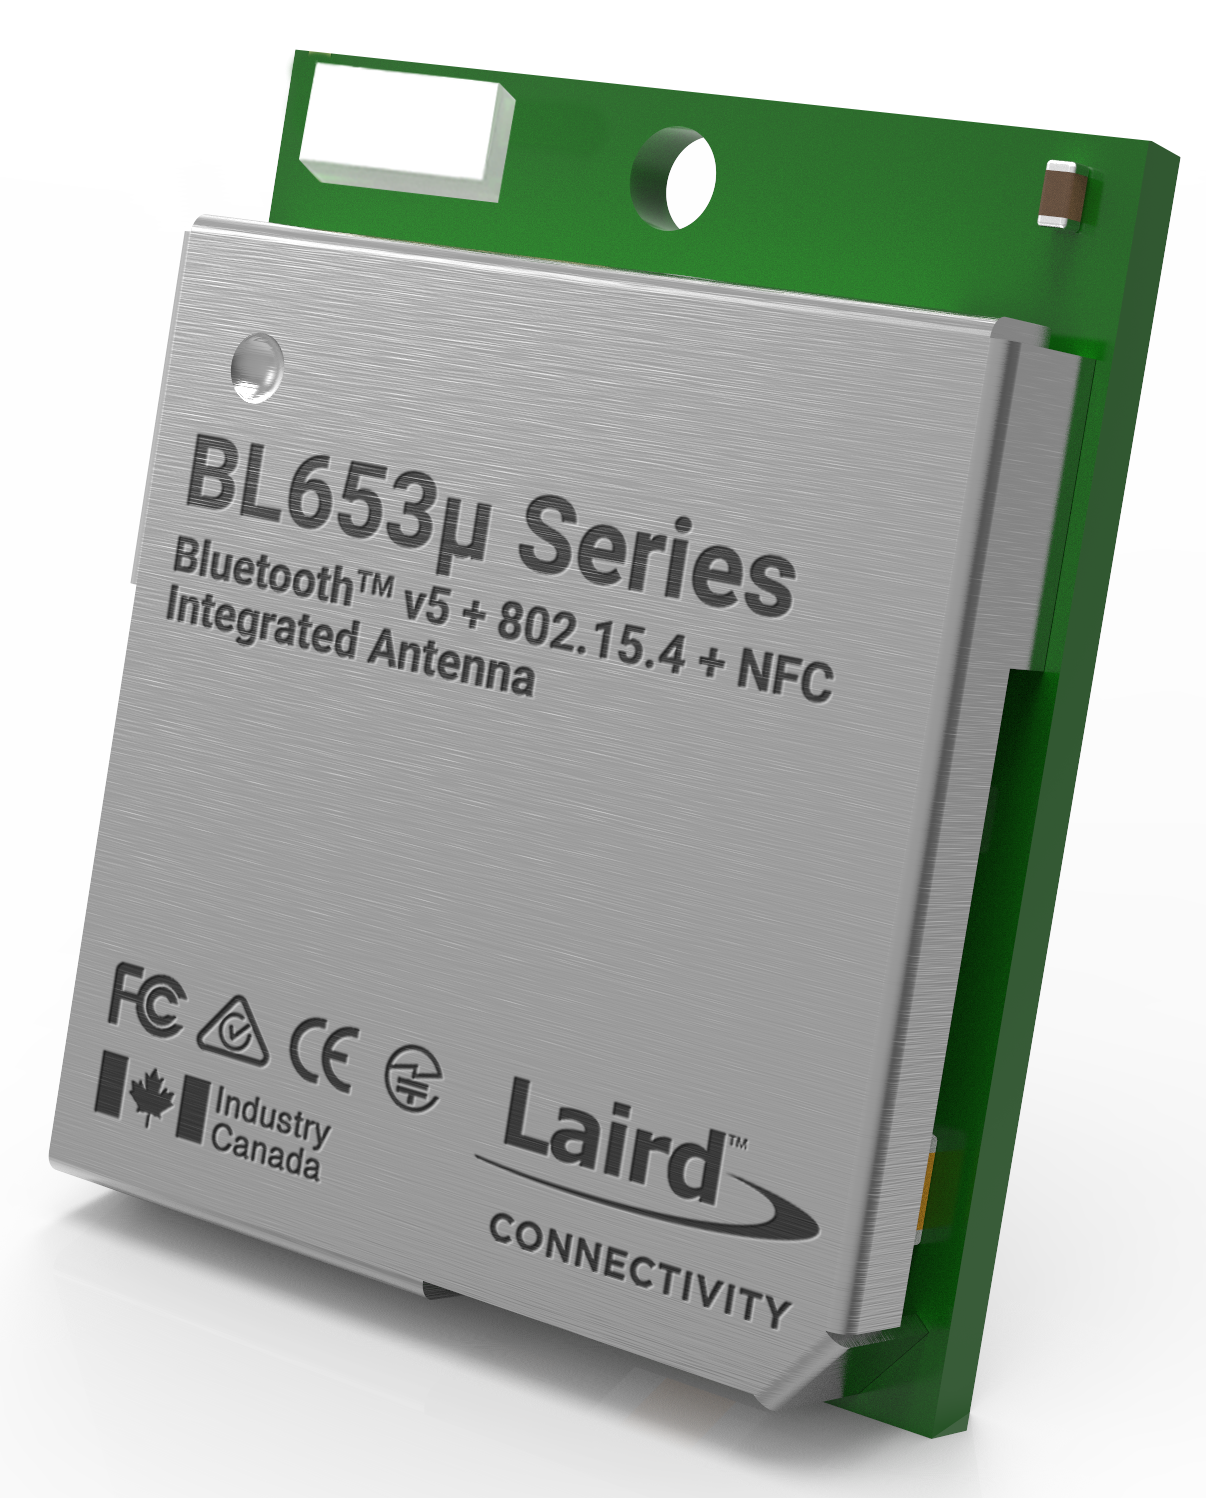 BL653μ Series - Bluetooth 5.1 + 802.15.4 + NFC Modules